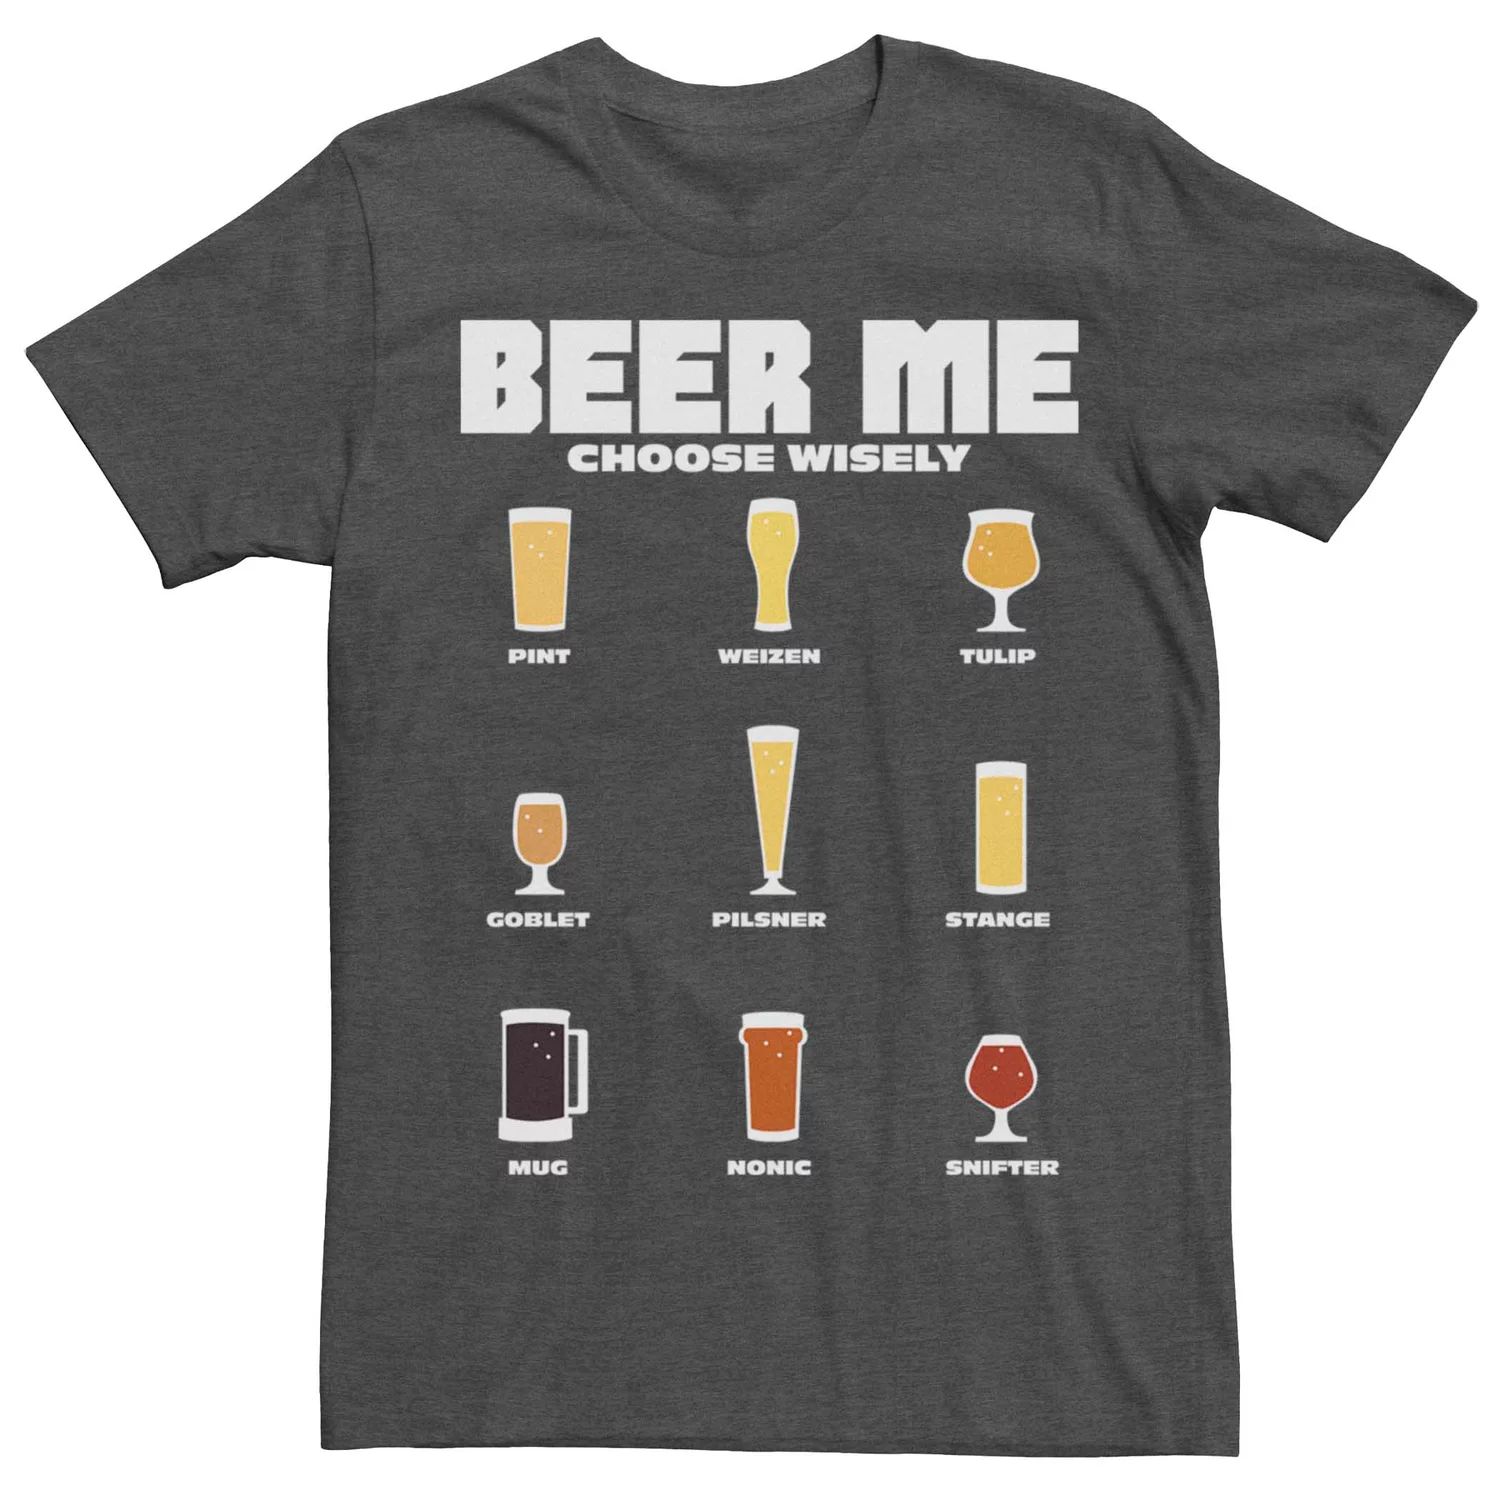 Мужская футболка с рисунком Beer Choices Licensed Character